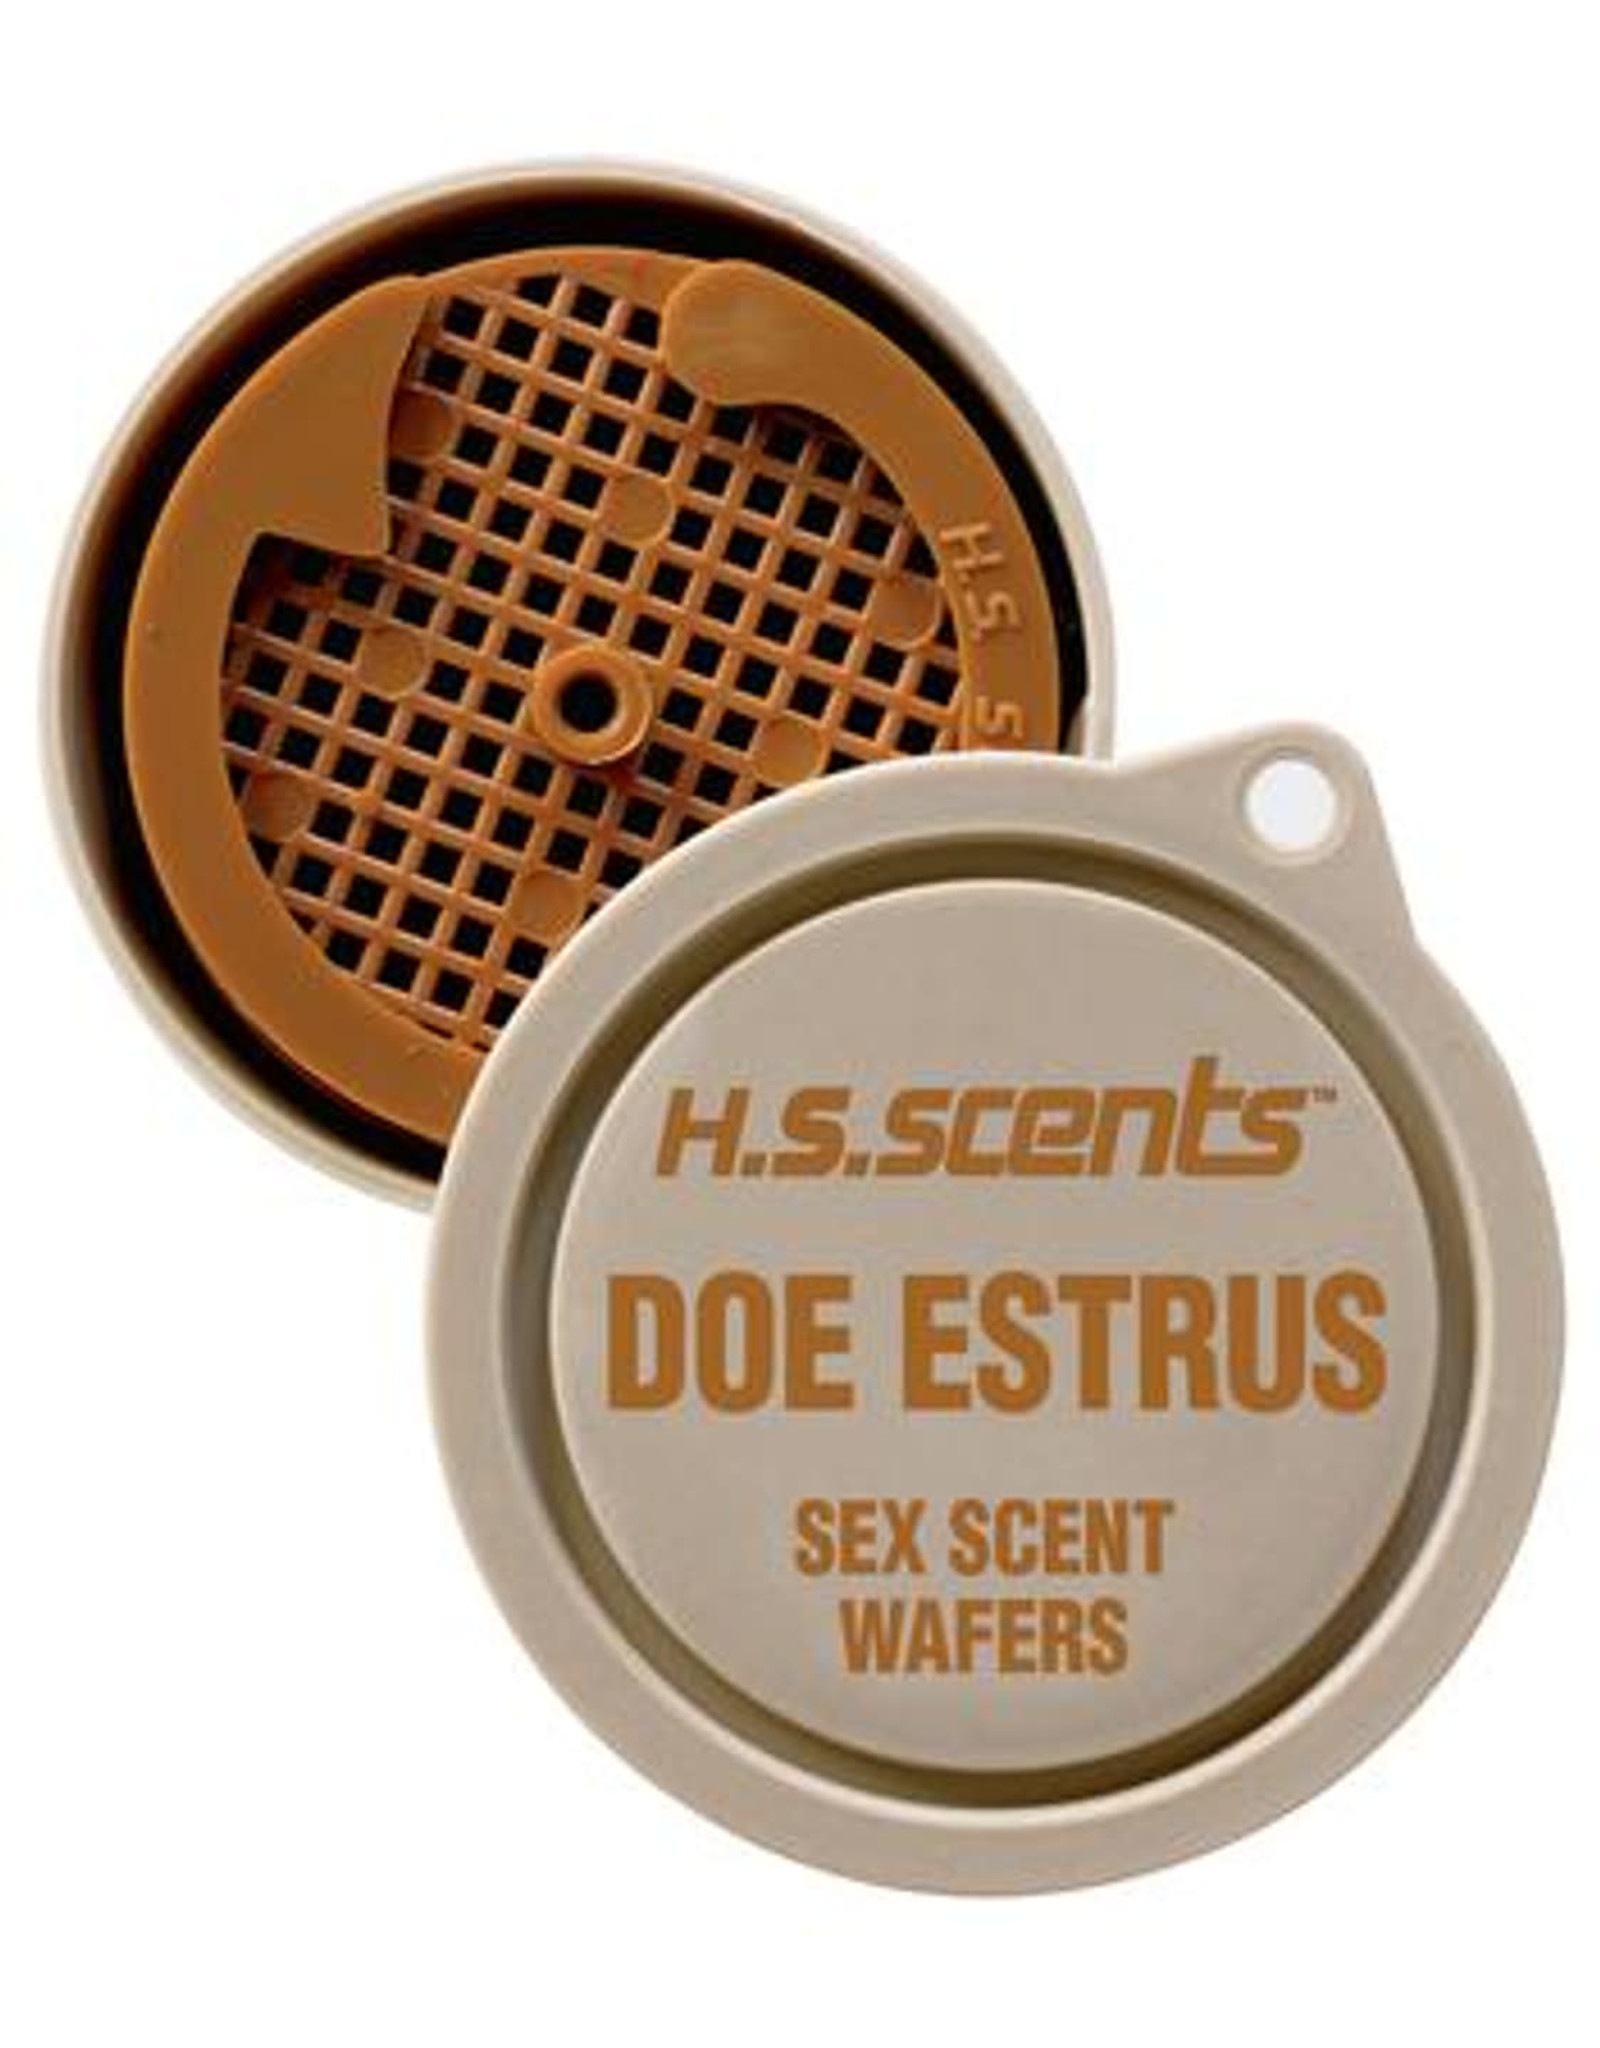 Hunter Specialties Hunter Specialties Doe Estrus 3 Sex Scent Wafers